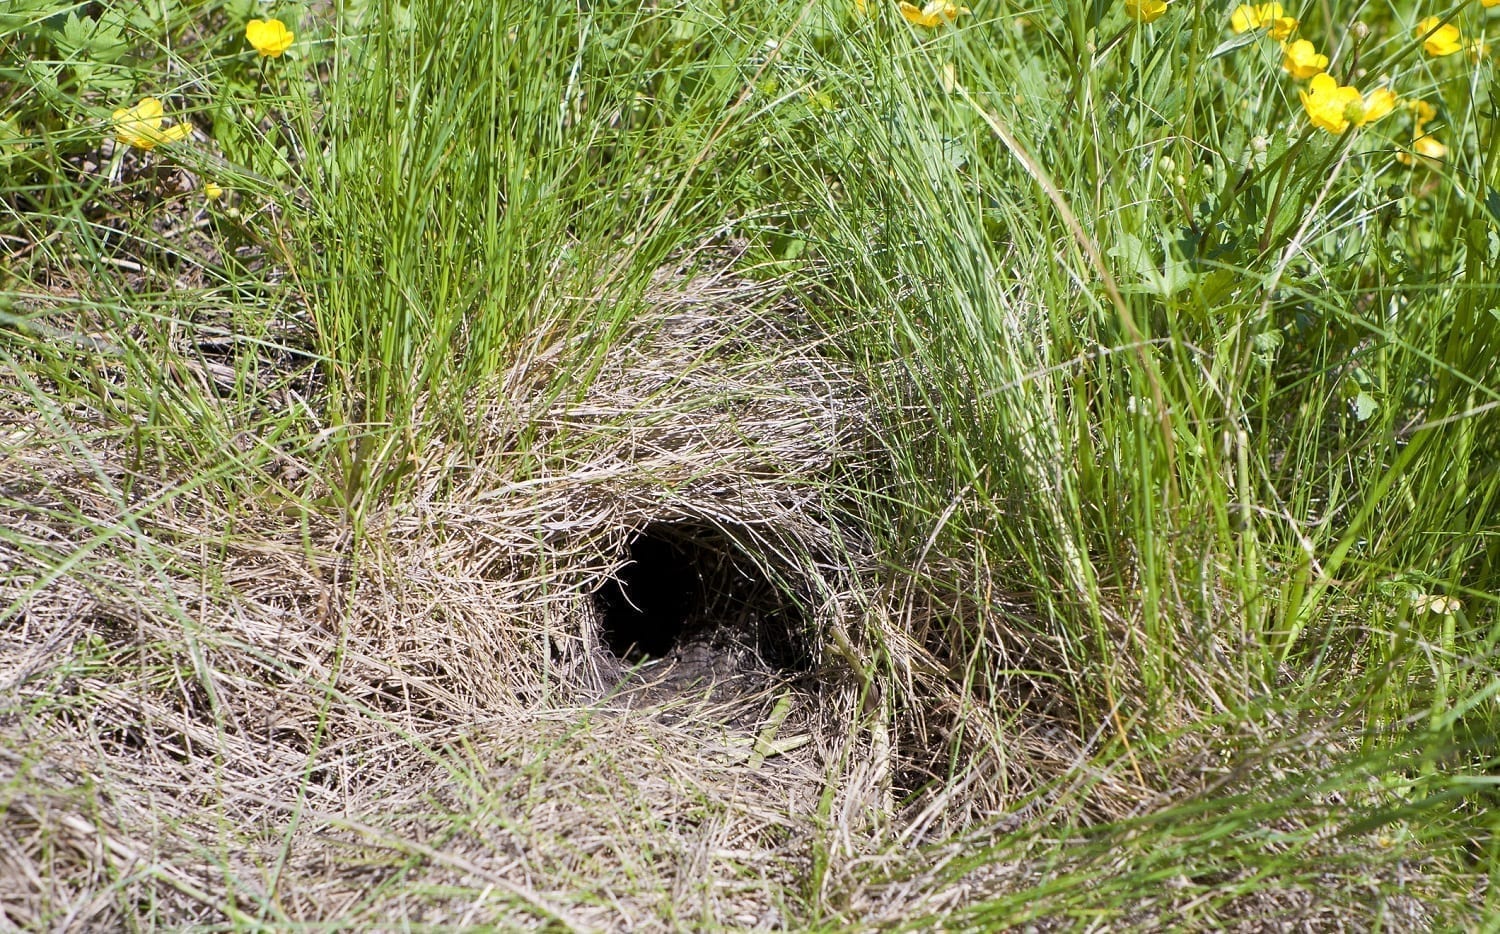 Animal burrow in grass: ID 32646065 © Mihairomeob | Dreamstime.com